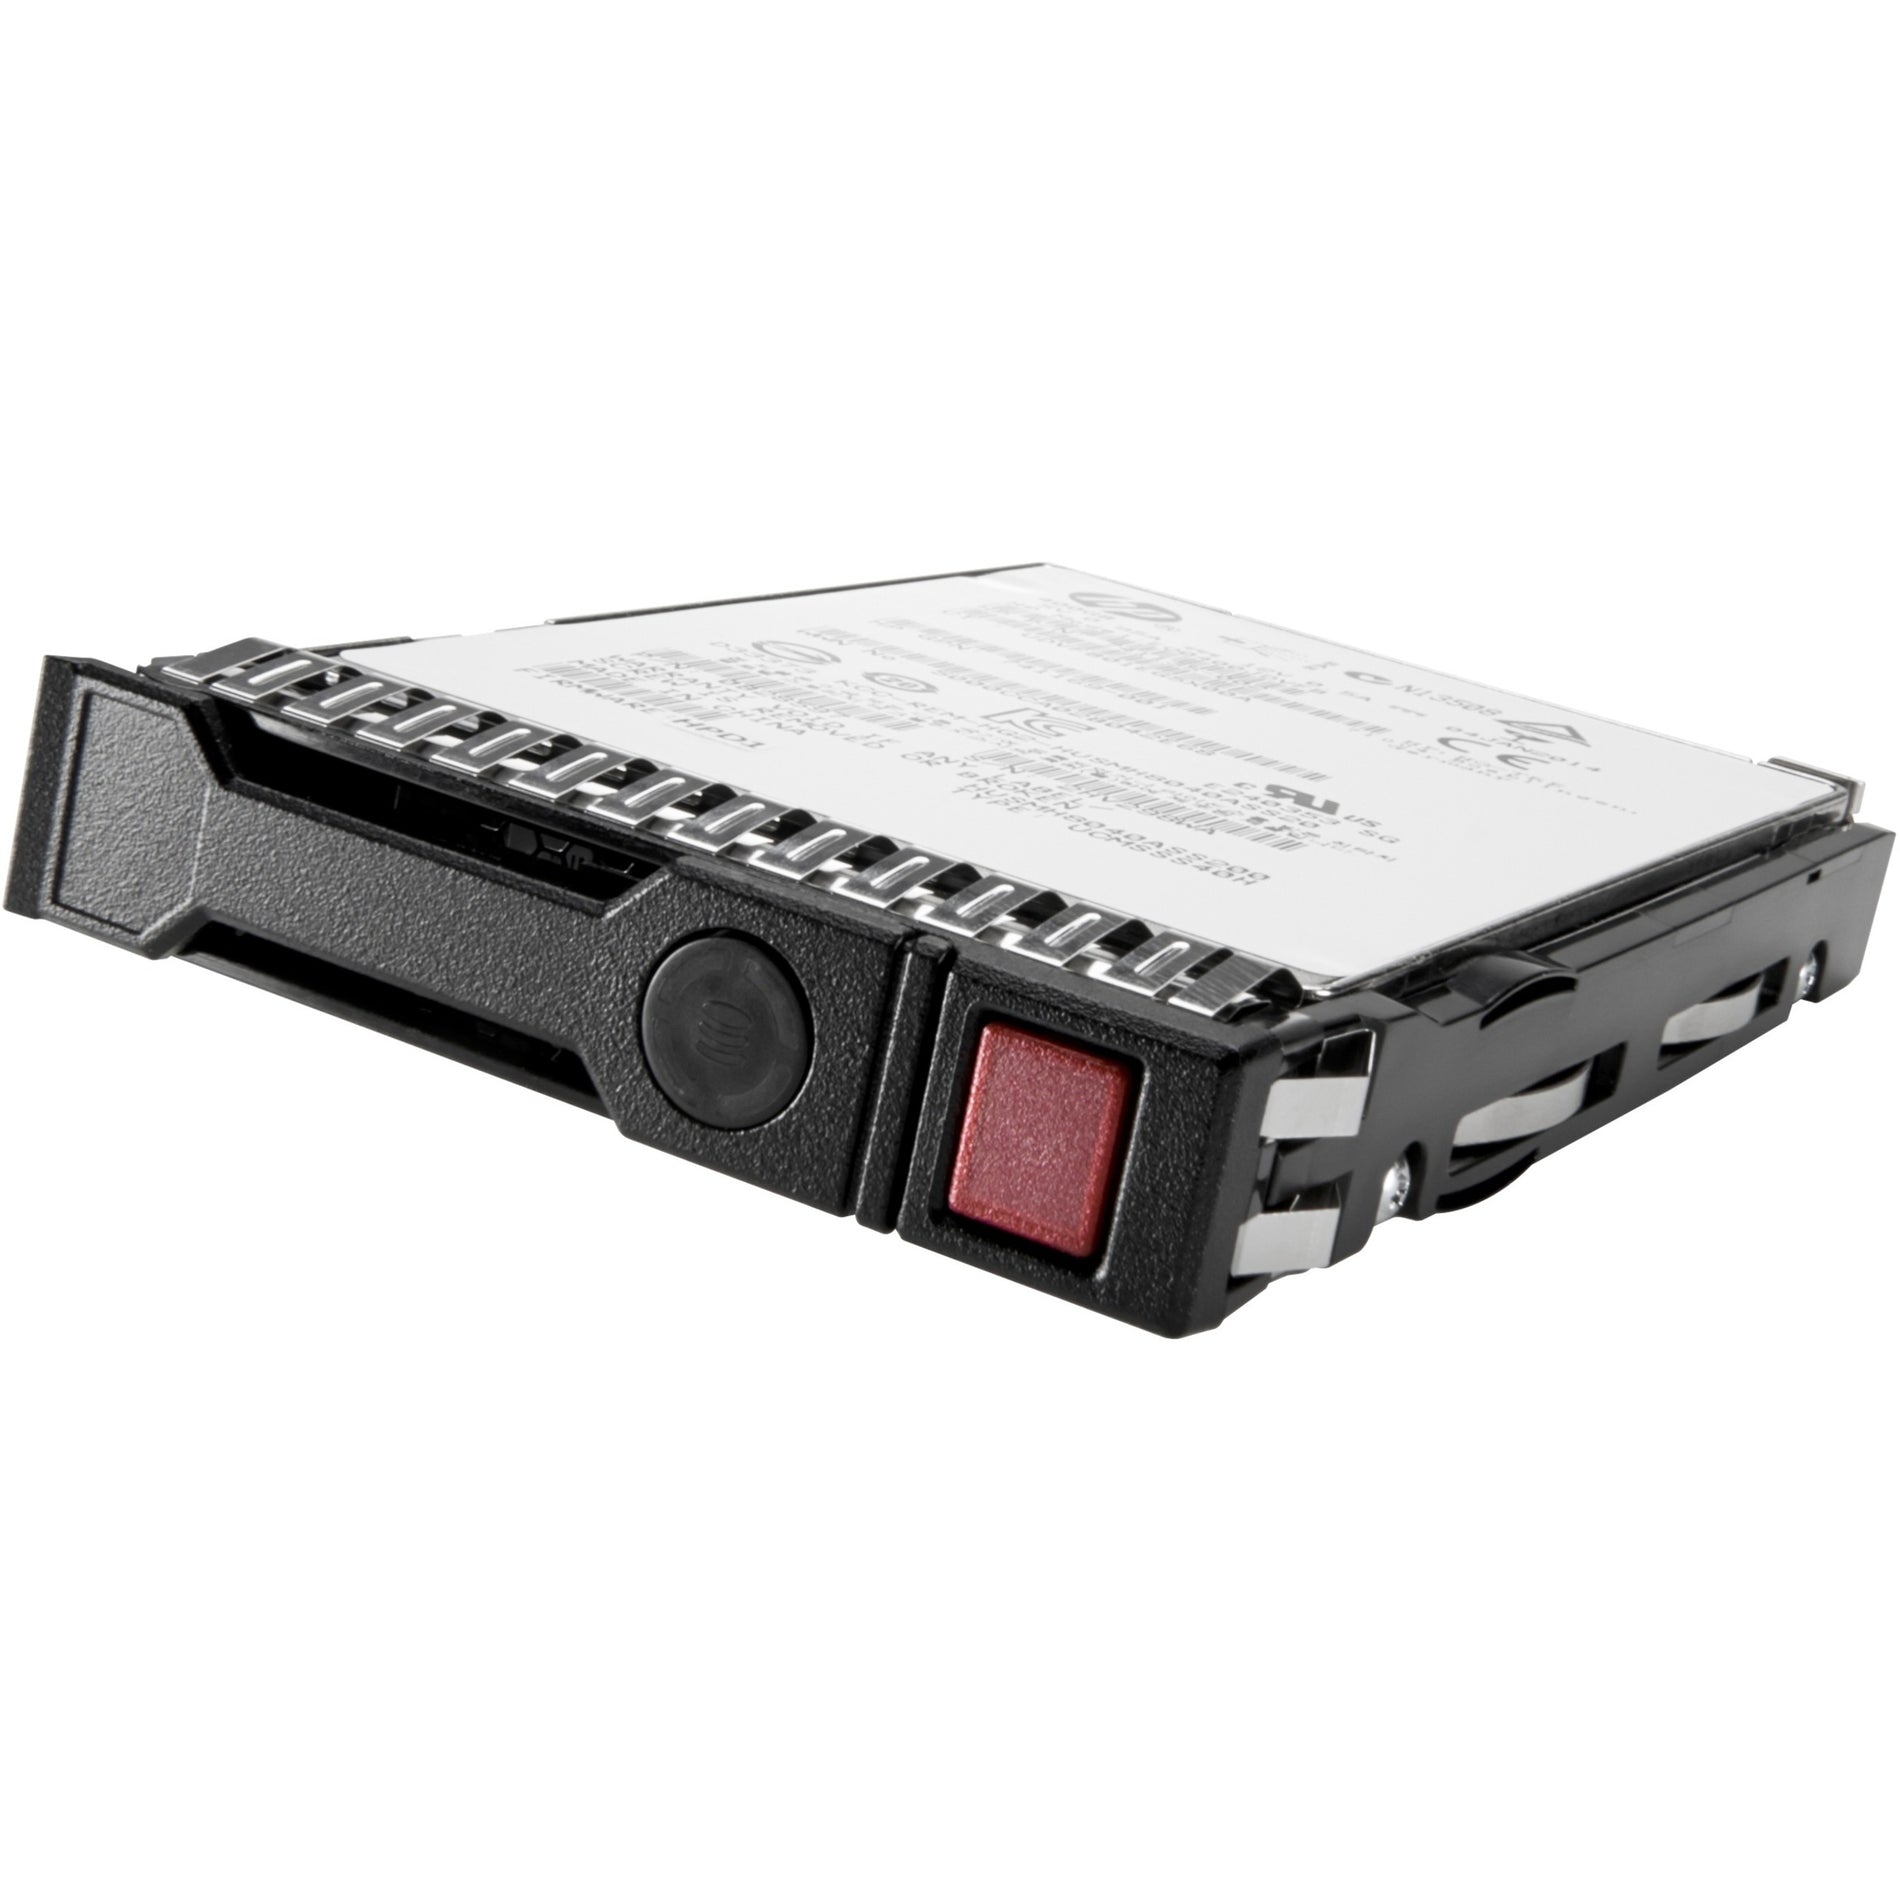 HPE 870759-B21 Hard Drive - 900 GB SAS (12Gb/s SAS), 2.5" Internal